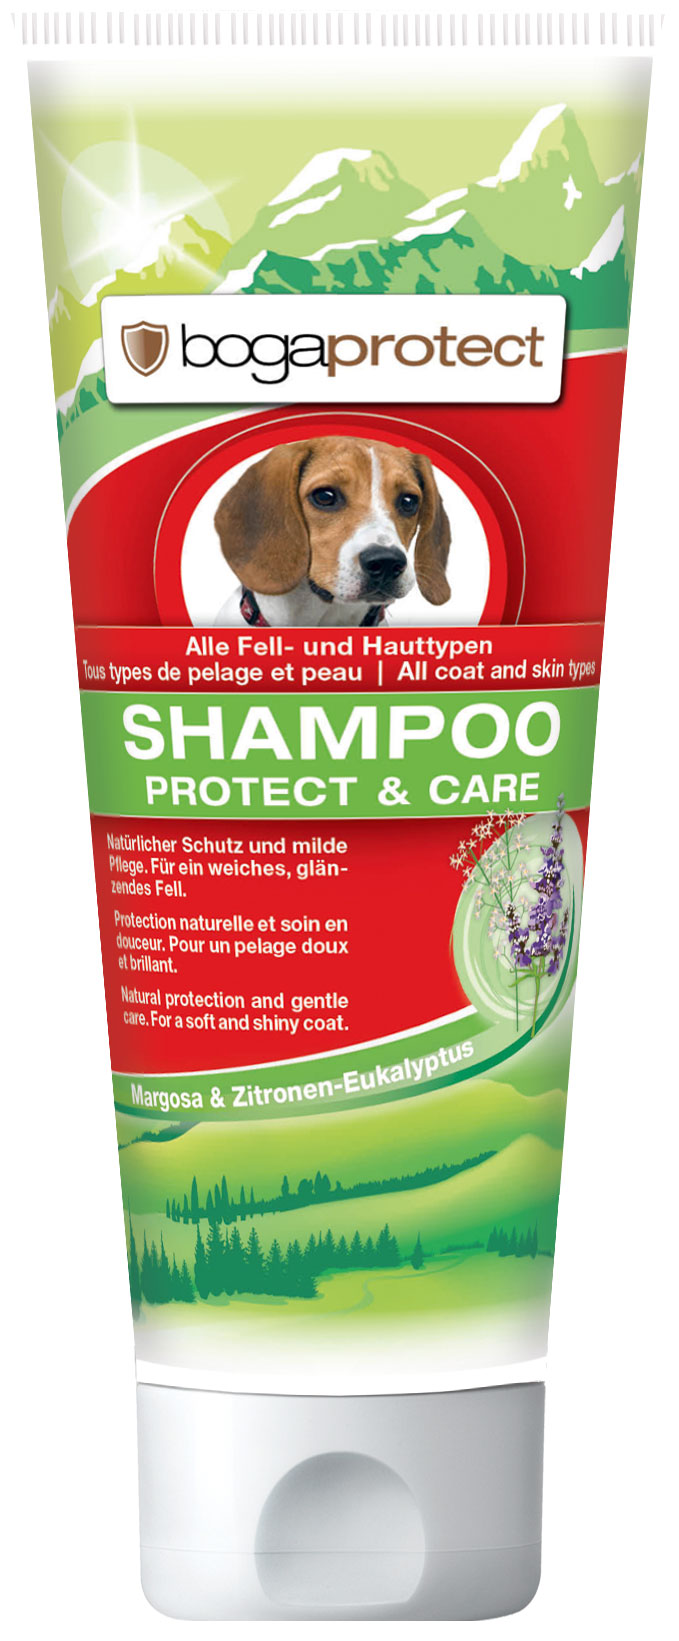 bogaprotect SHAMPOO Protect & Care